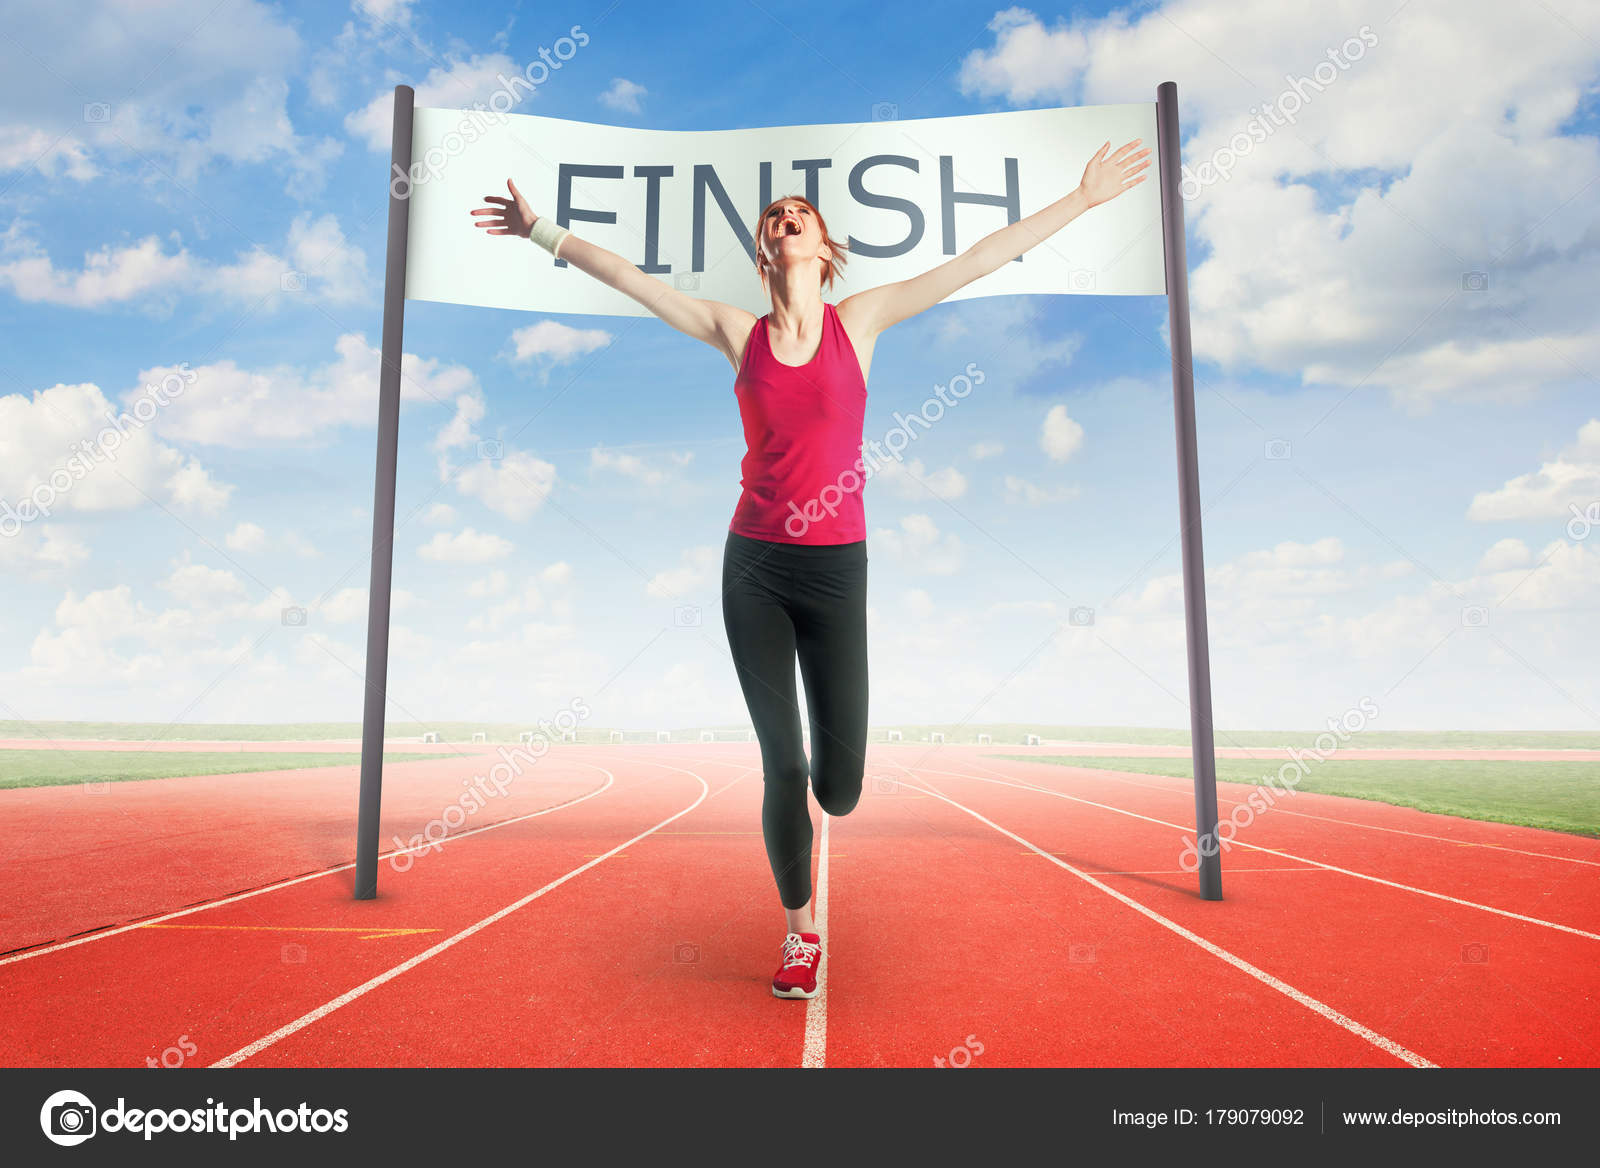 woman-runner-crossing-finish-line-stock-photo-tijanam-179079092